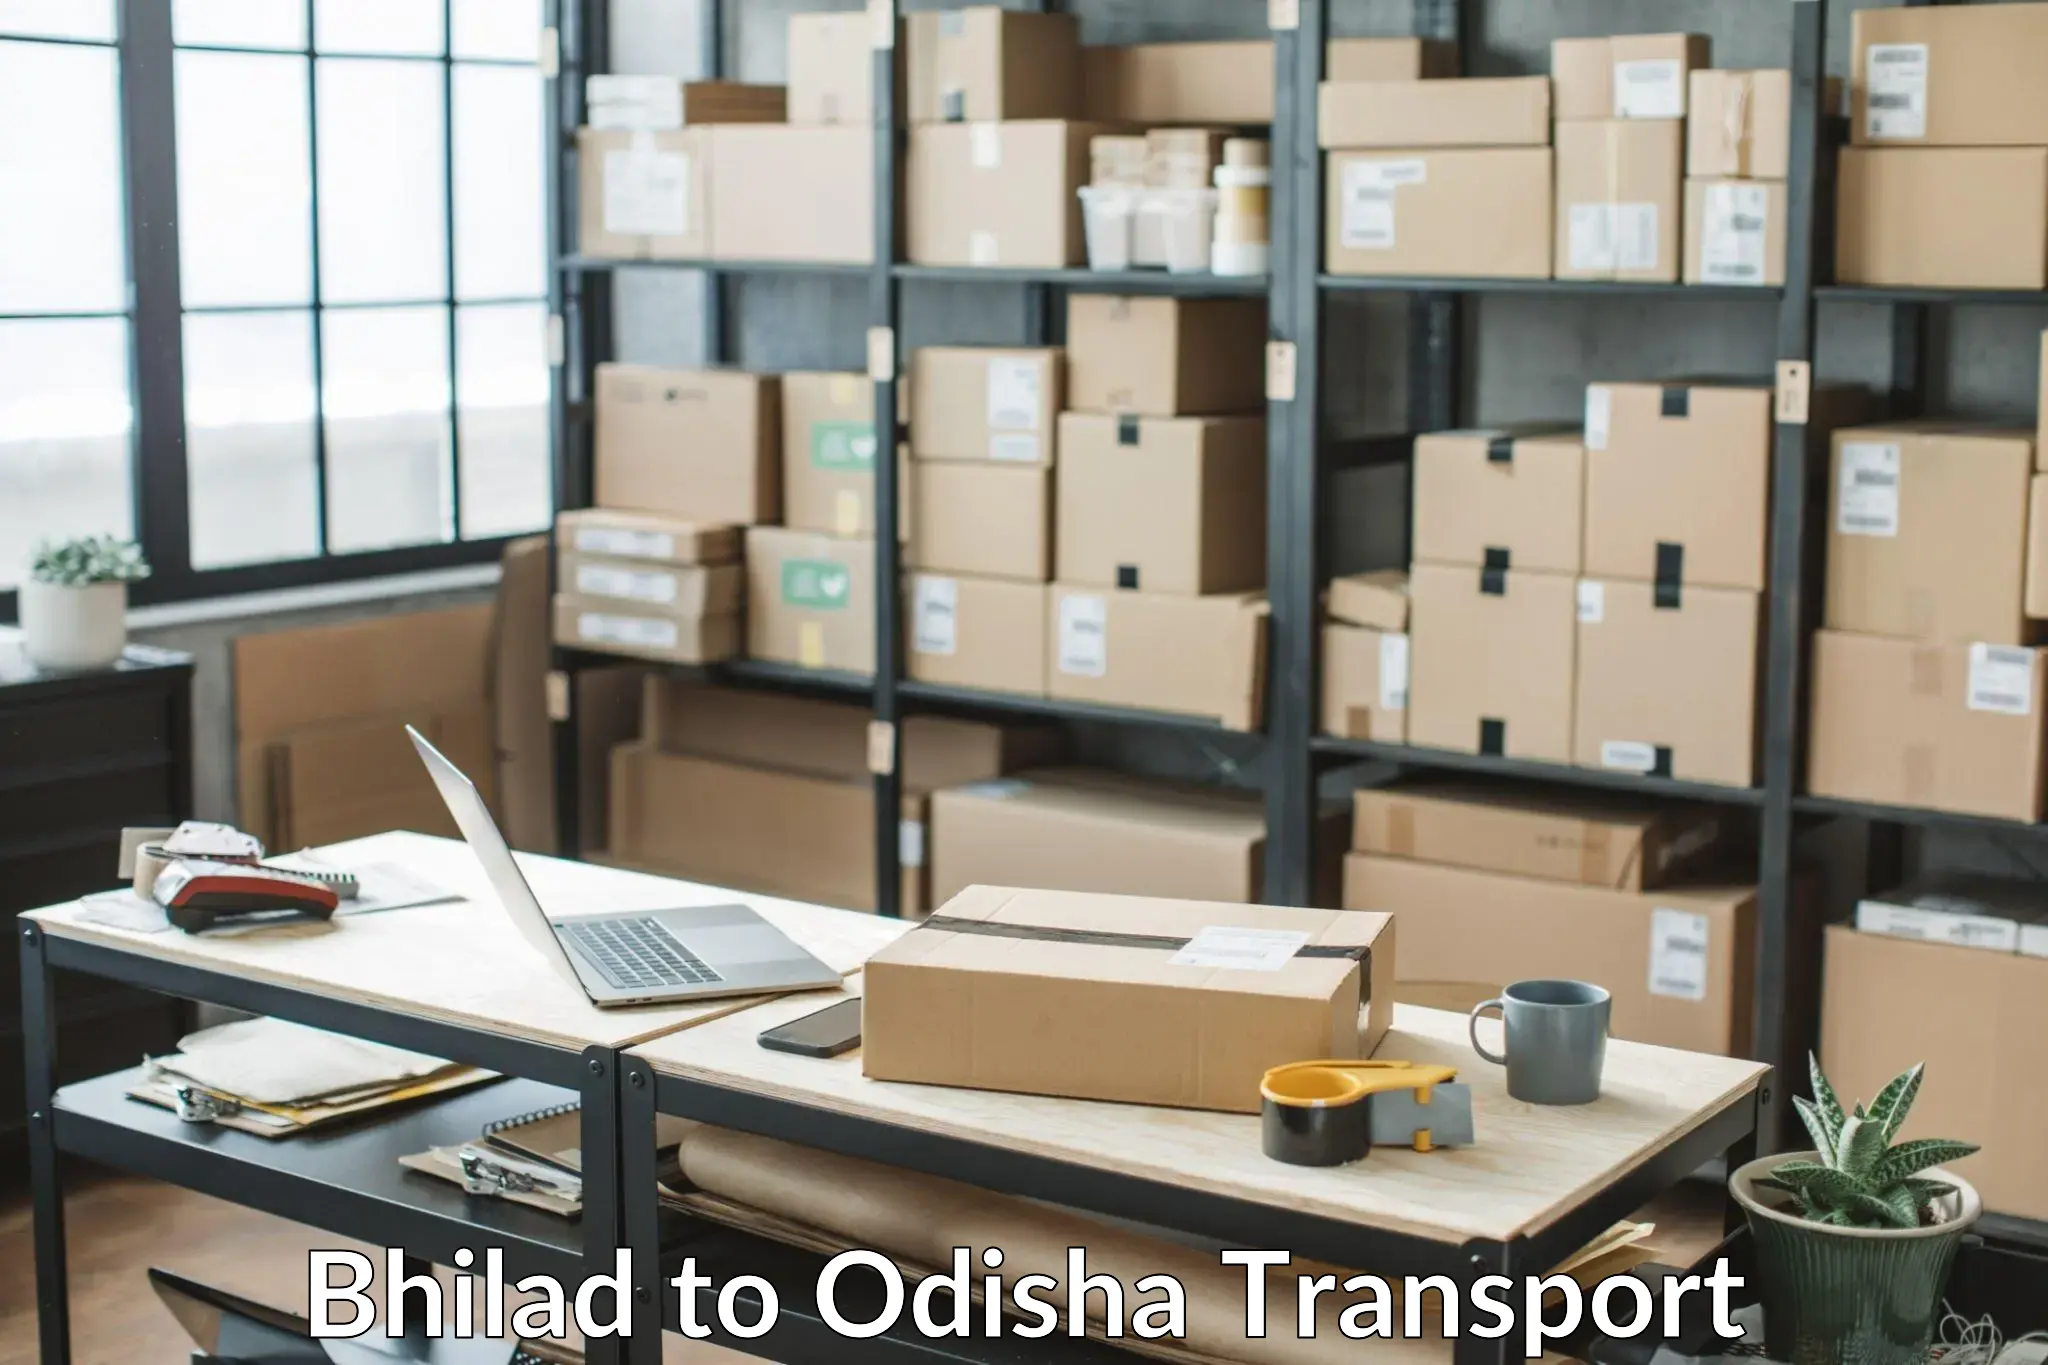 Truck transport companies in India Bhilad to Odisha